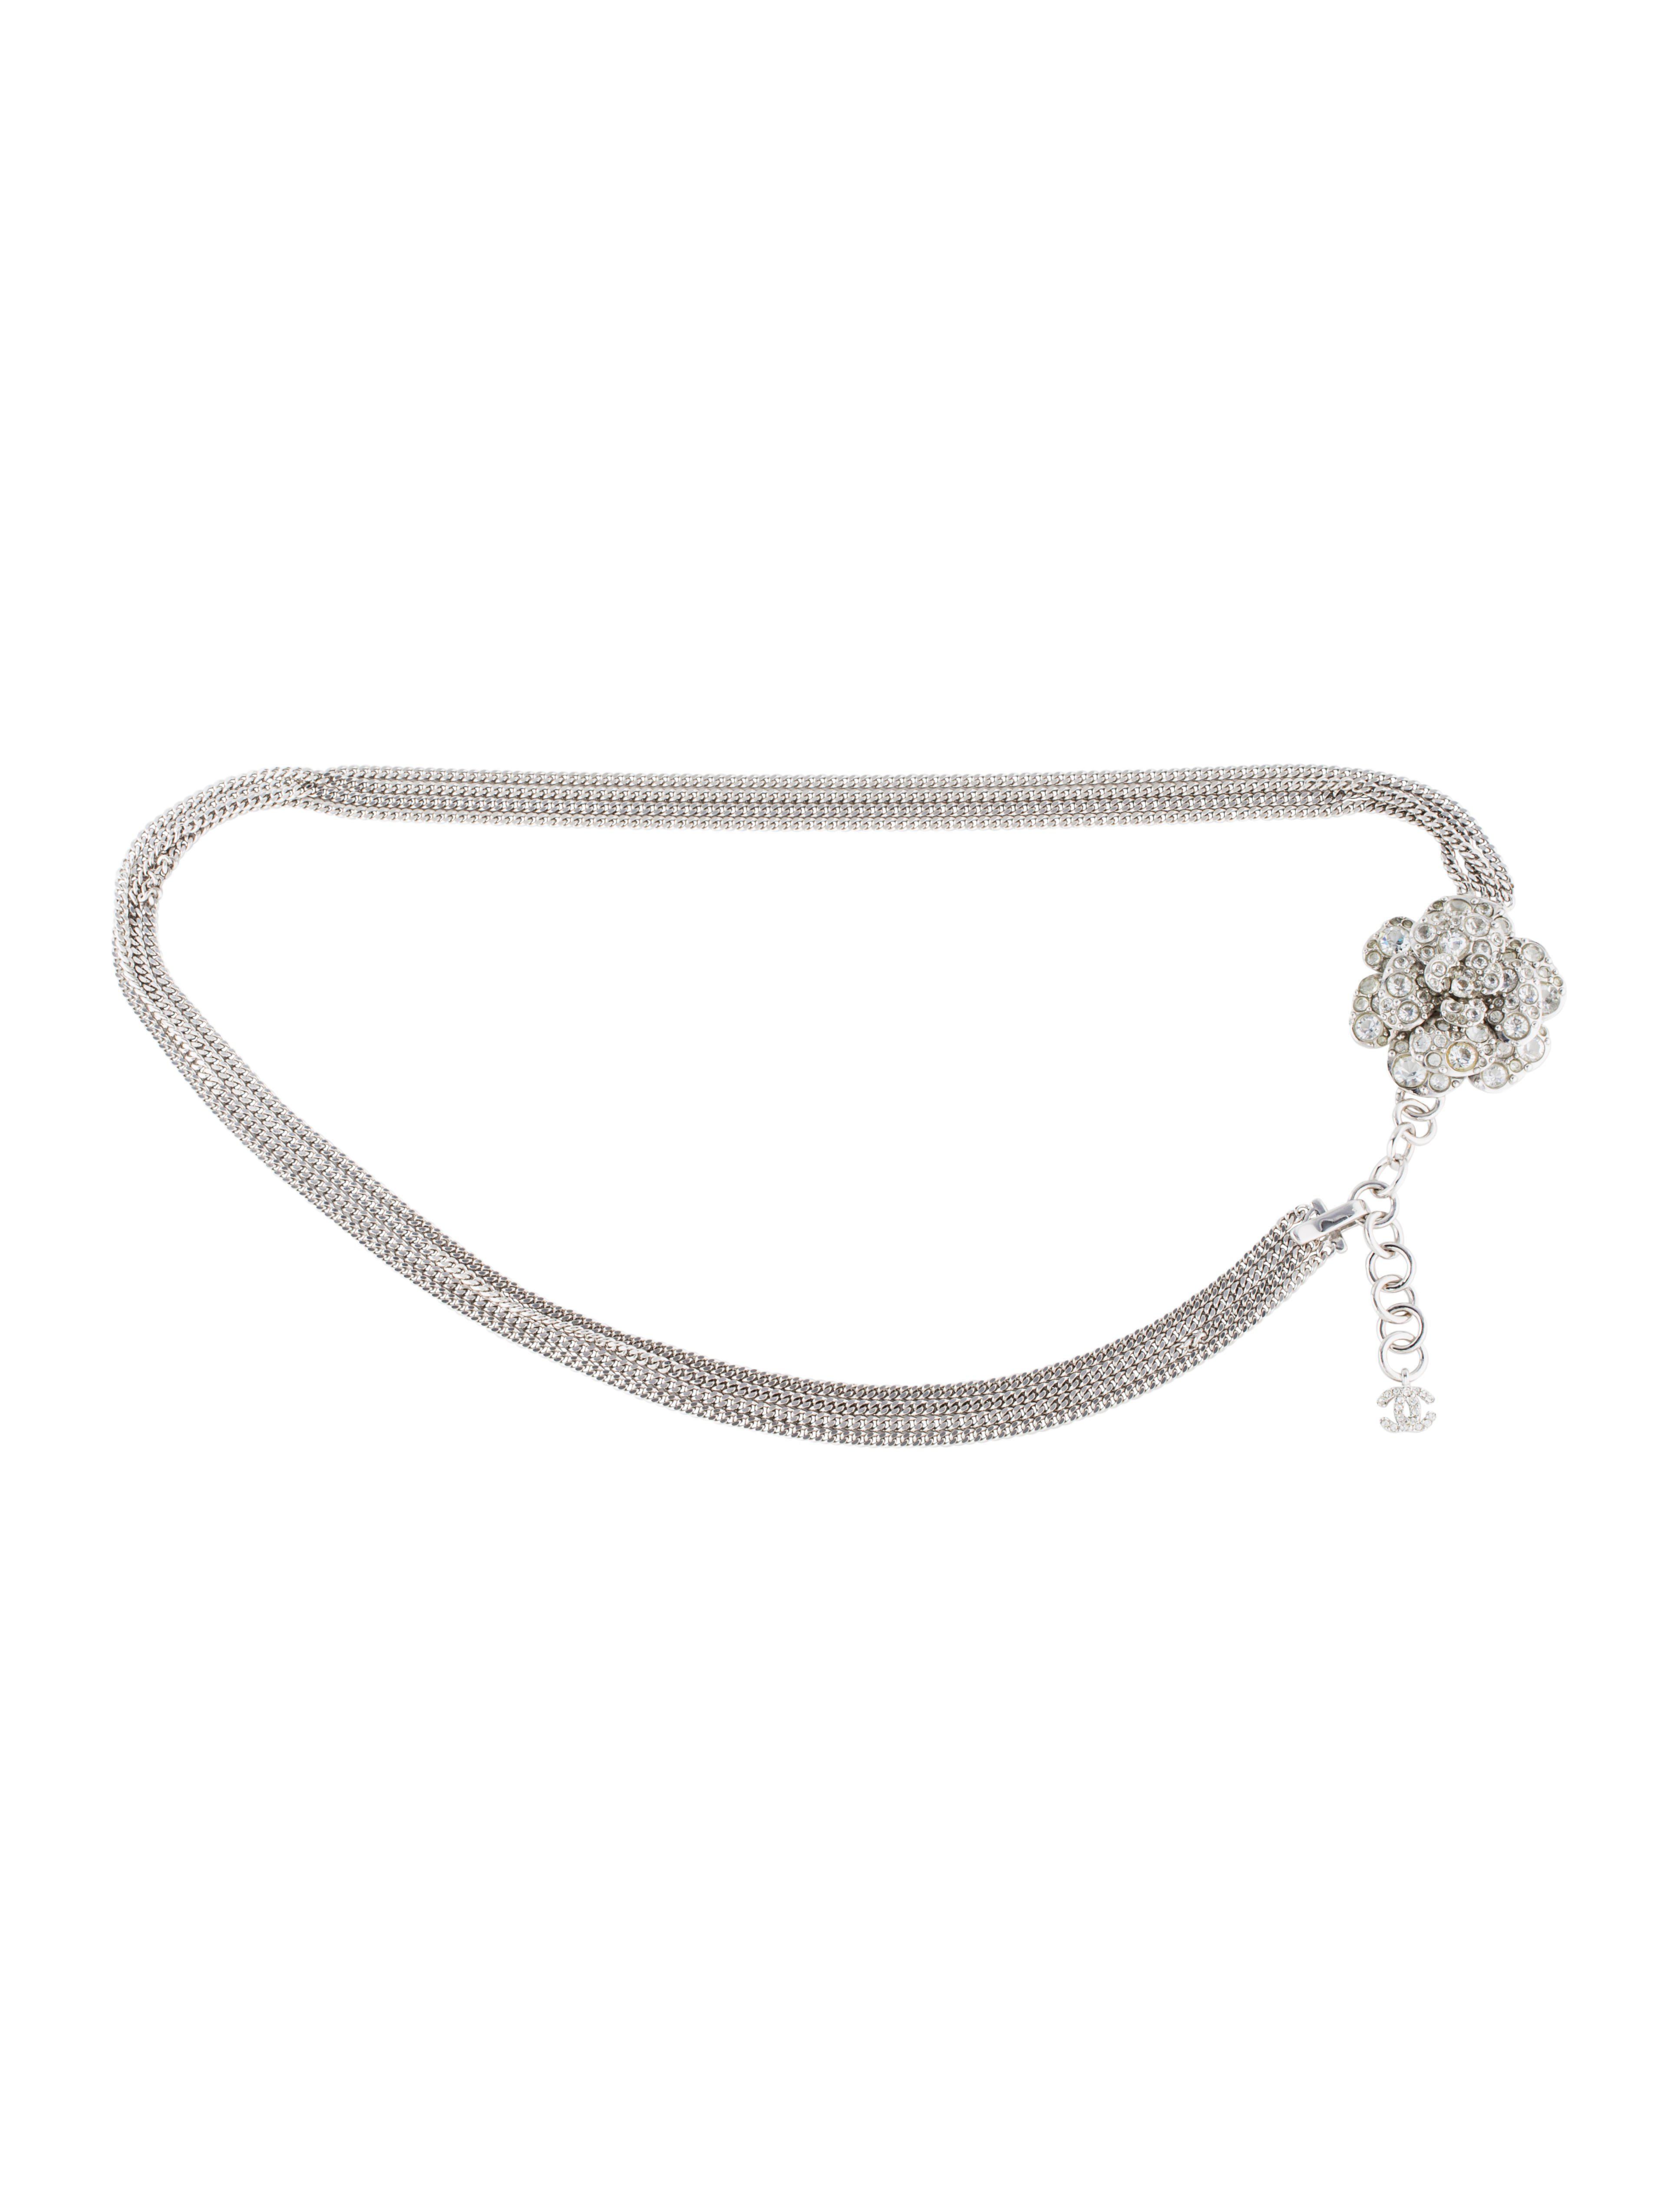 Lyst - Chanel Chain-link Camellia Belt Silver in Metallic